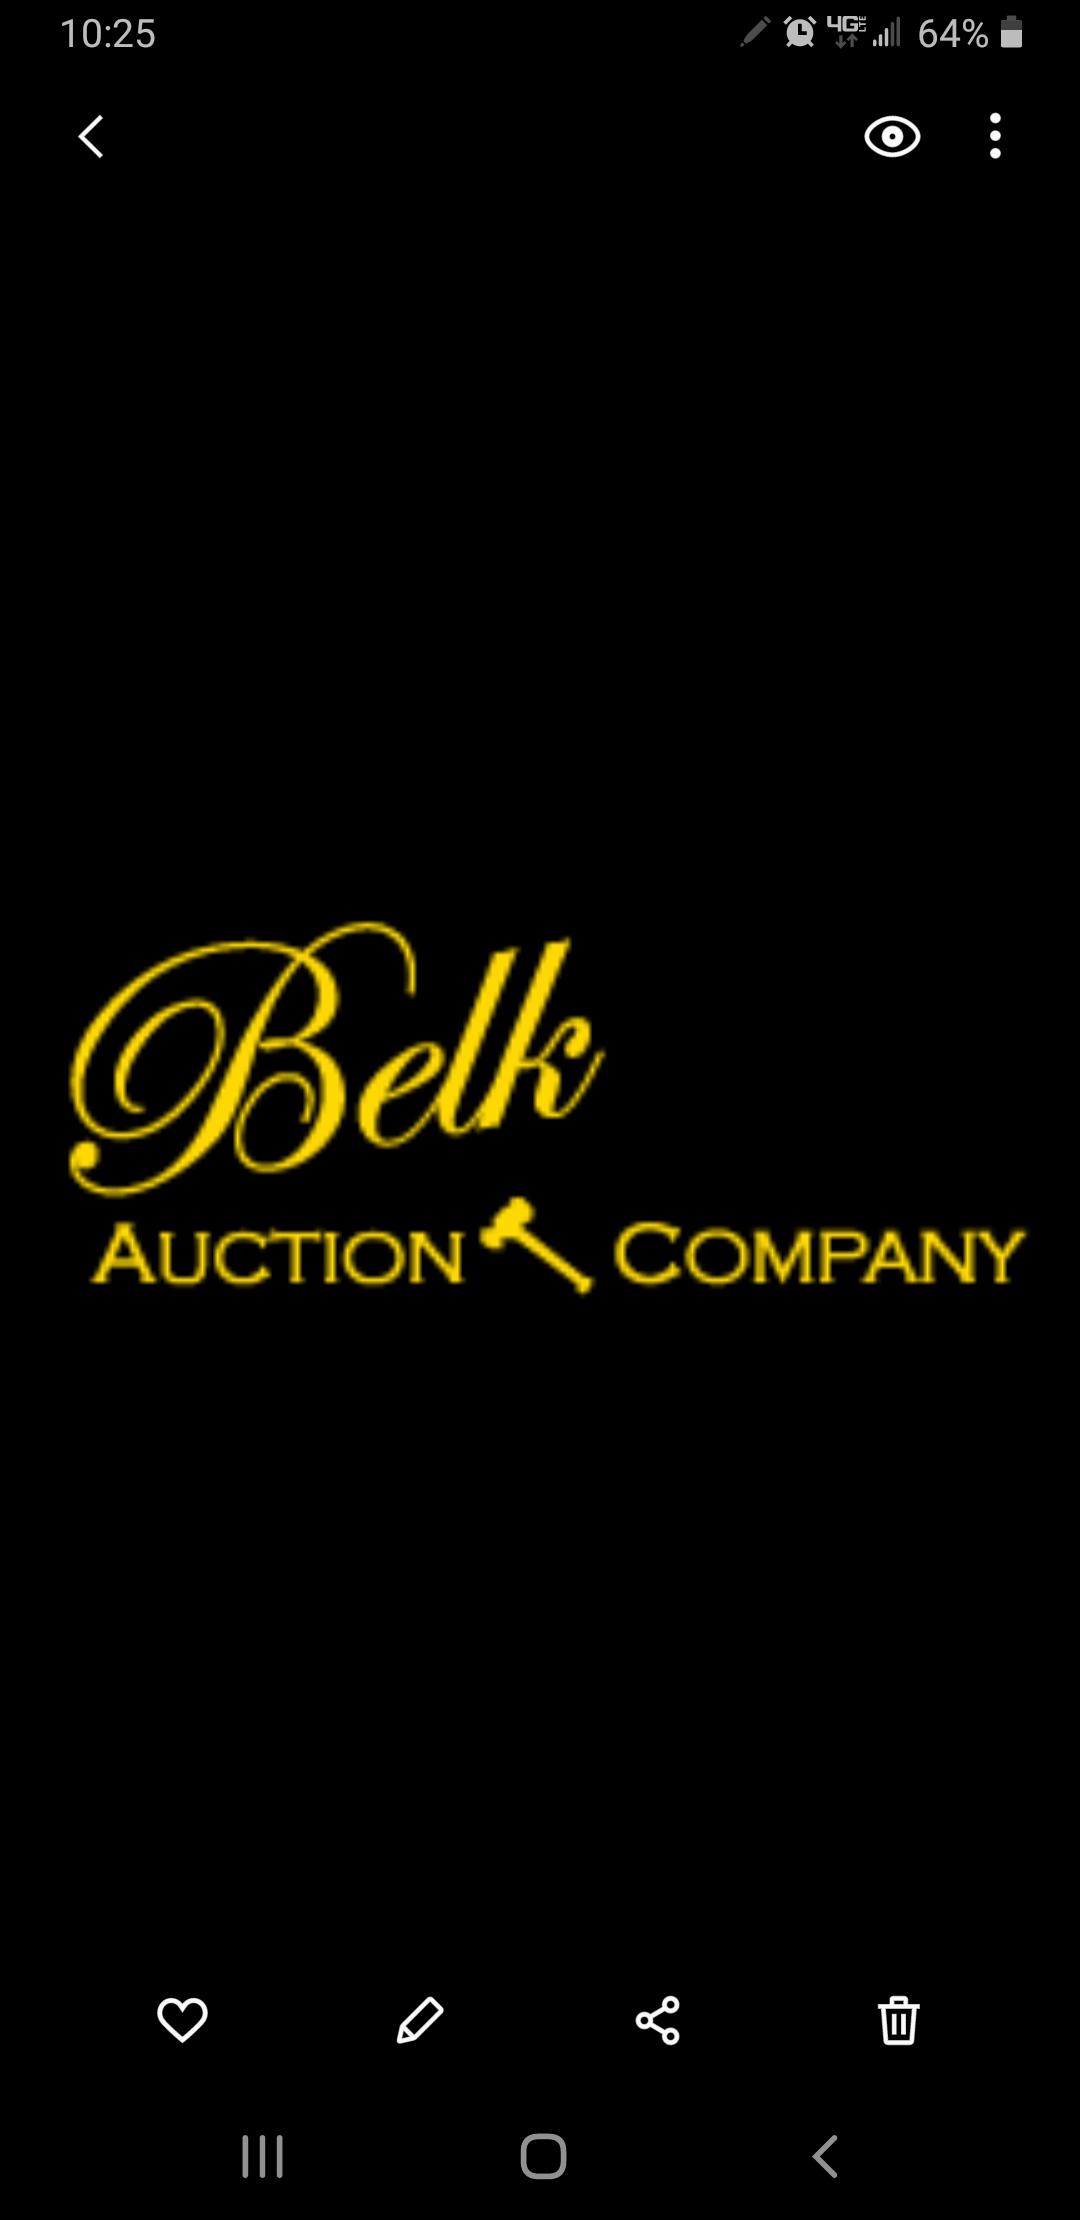 Belk Auction Company